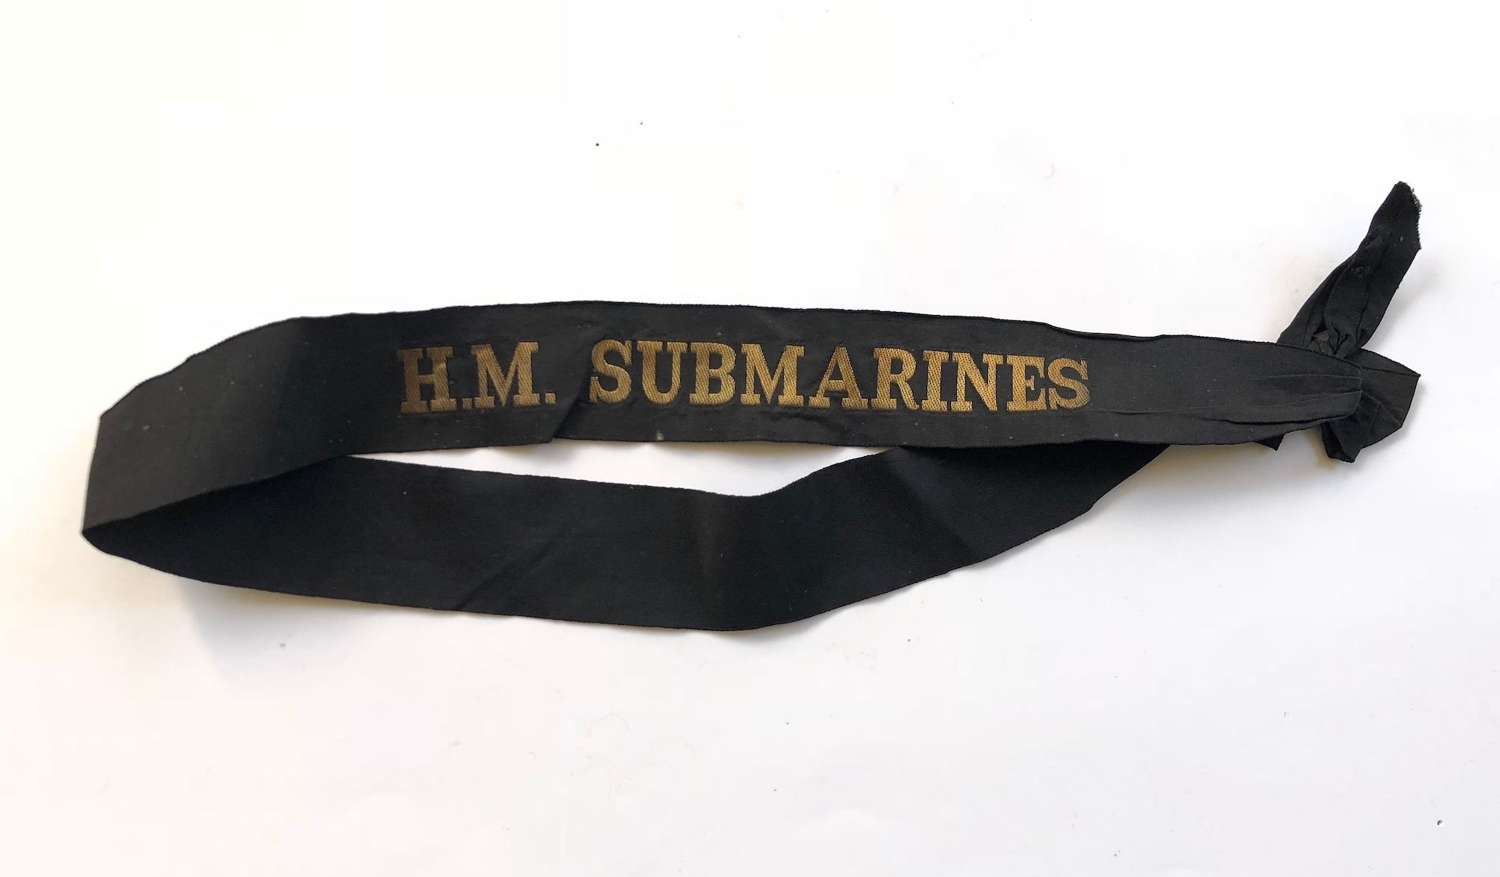 WW2 Period Royal Navy H.M. Submarines Ratings Cap Tally Badge